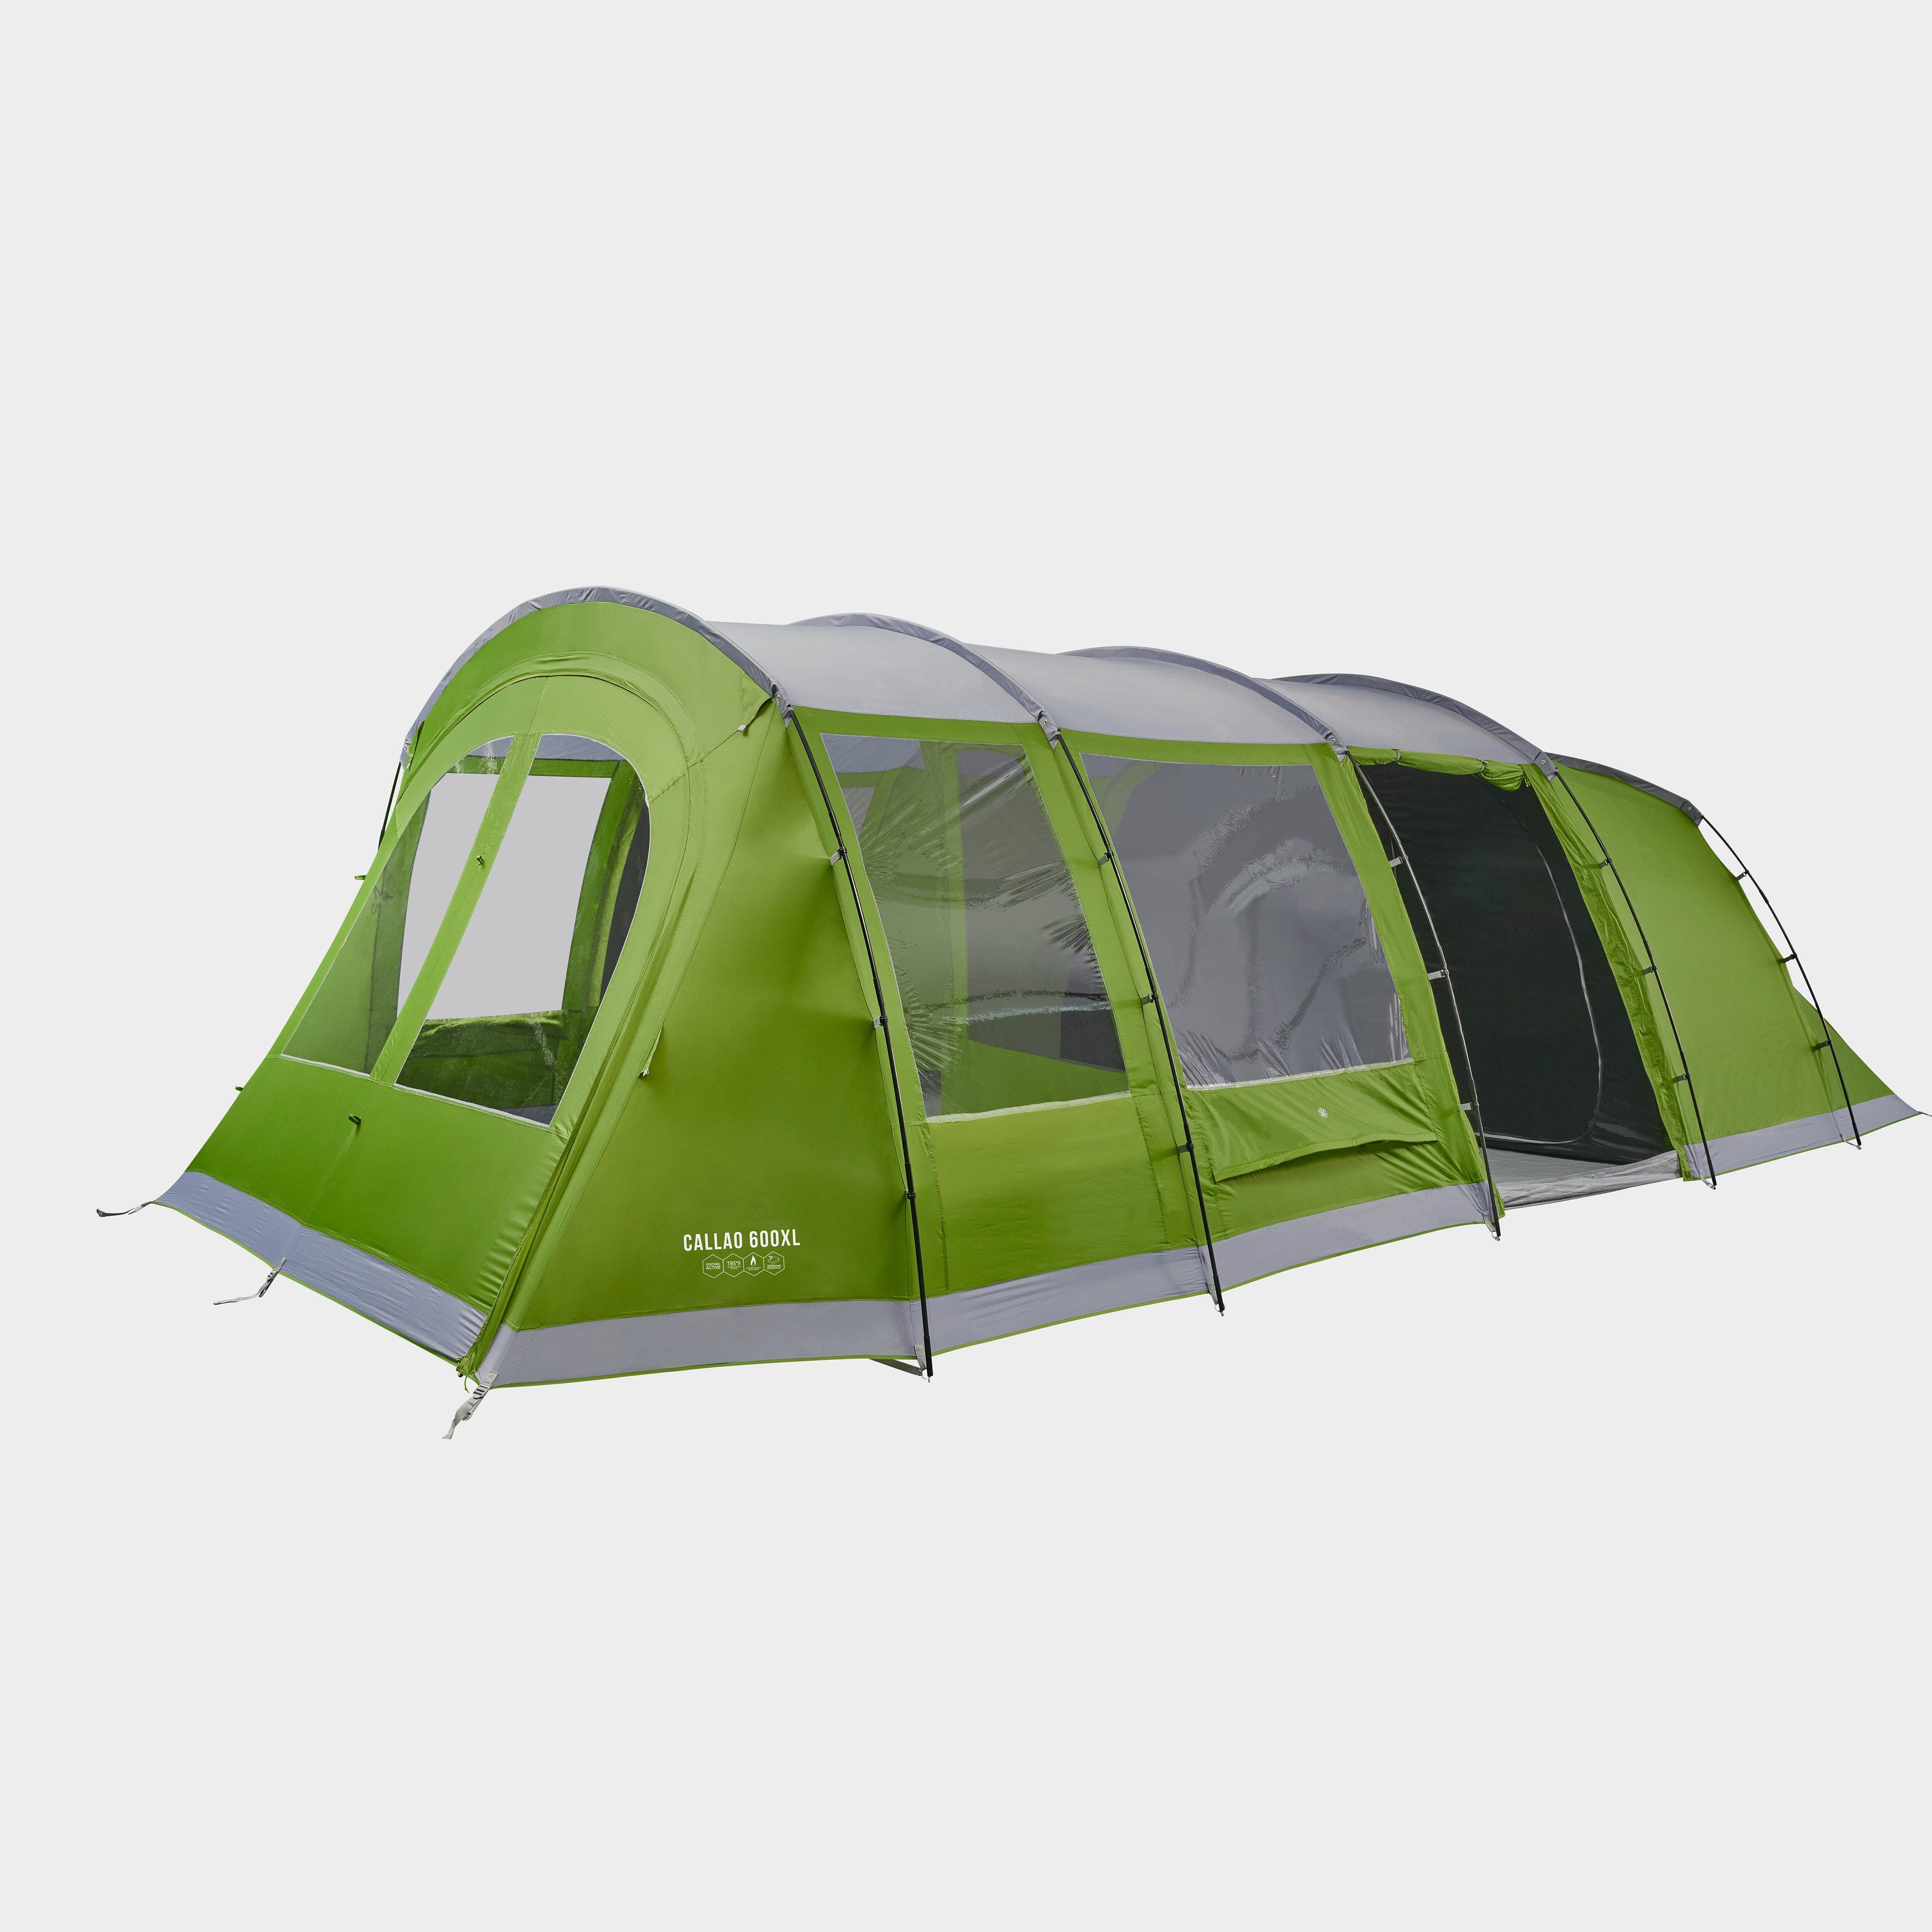  VANGO Callao 600XL Family Tent, Green